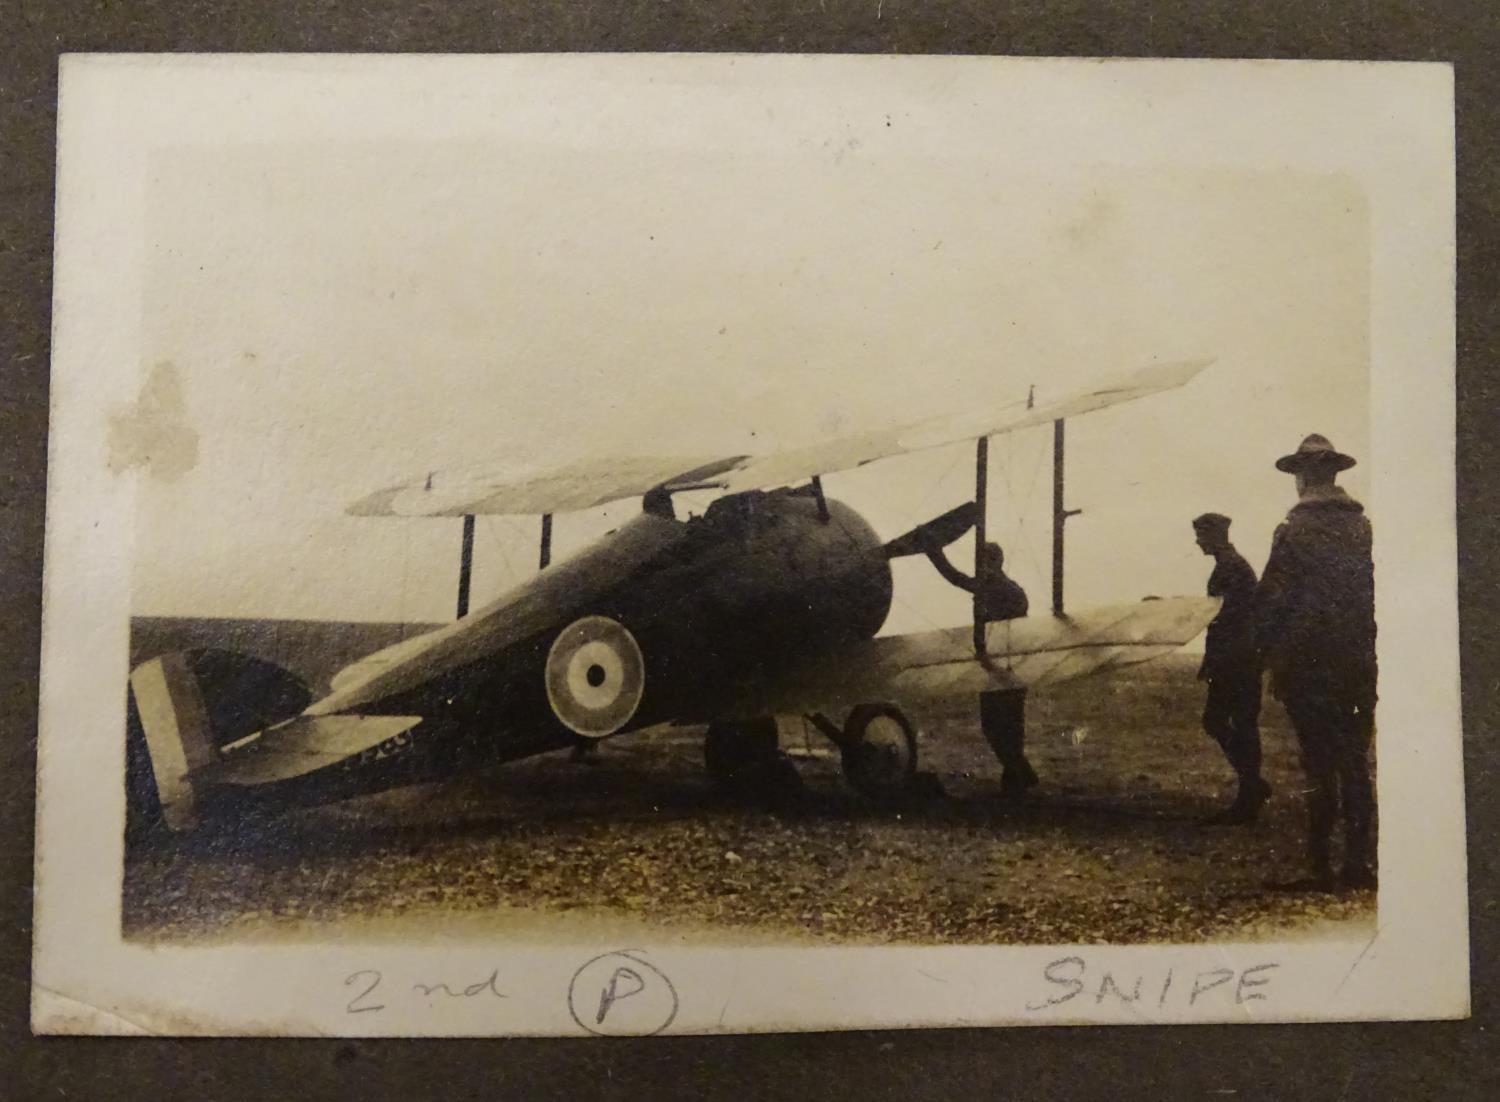 Militaria: Australian Pilot's WW1 photo album Royal Flying Corps. WWI / First World War - Image 14 of 25